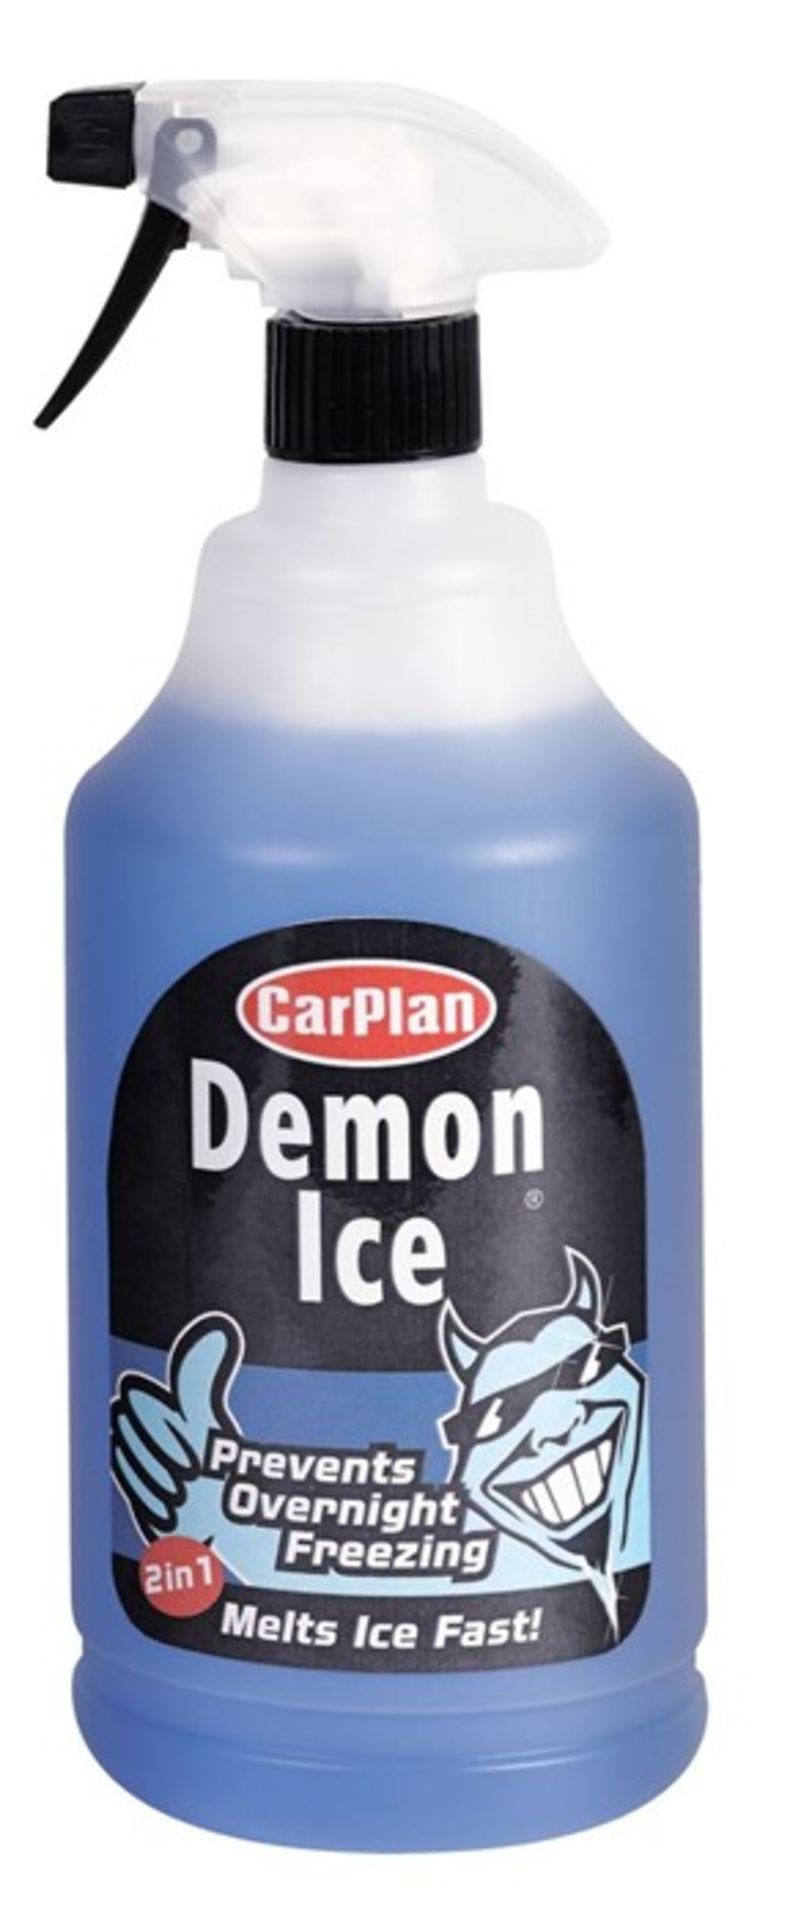 CARPLAN DEMON ICE 1L BOTTLE (NEW & SEALED)